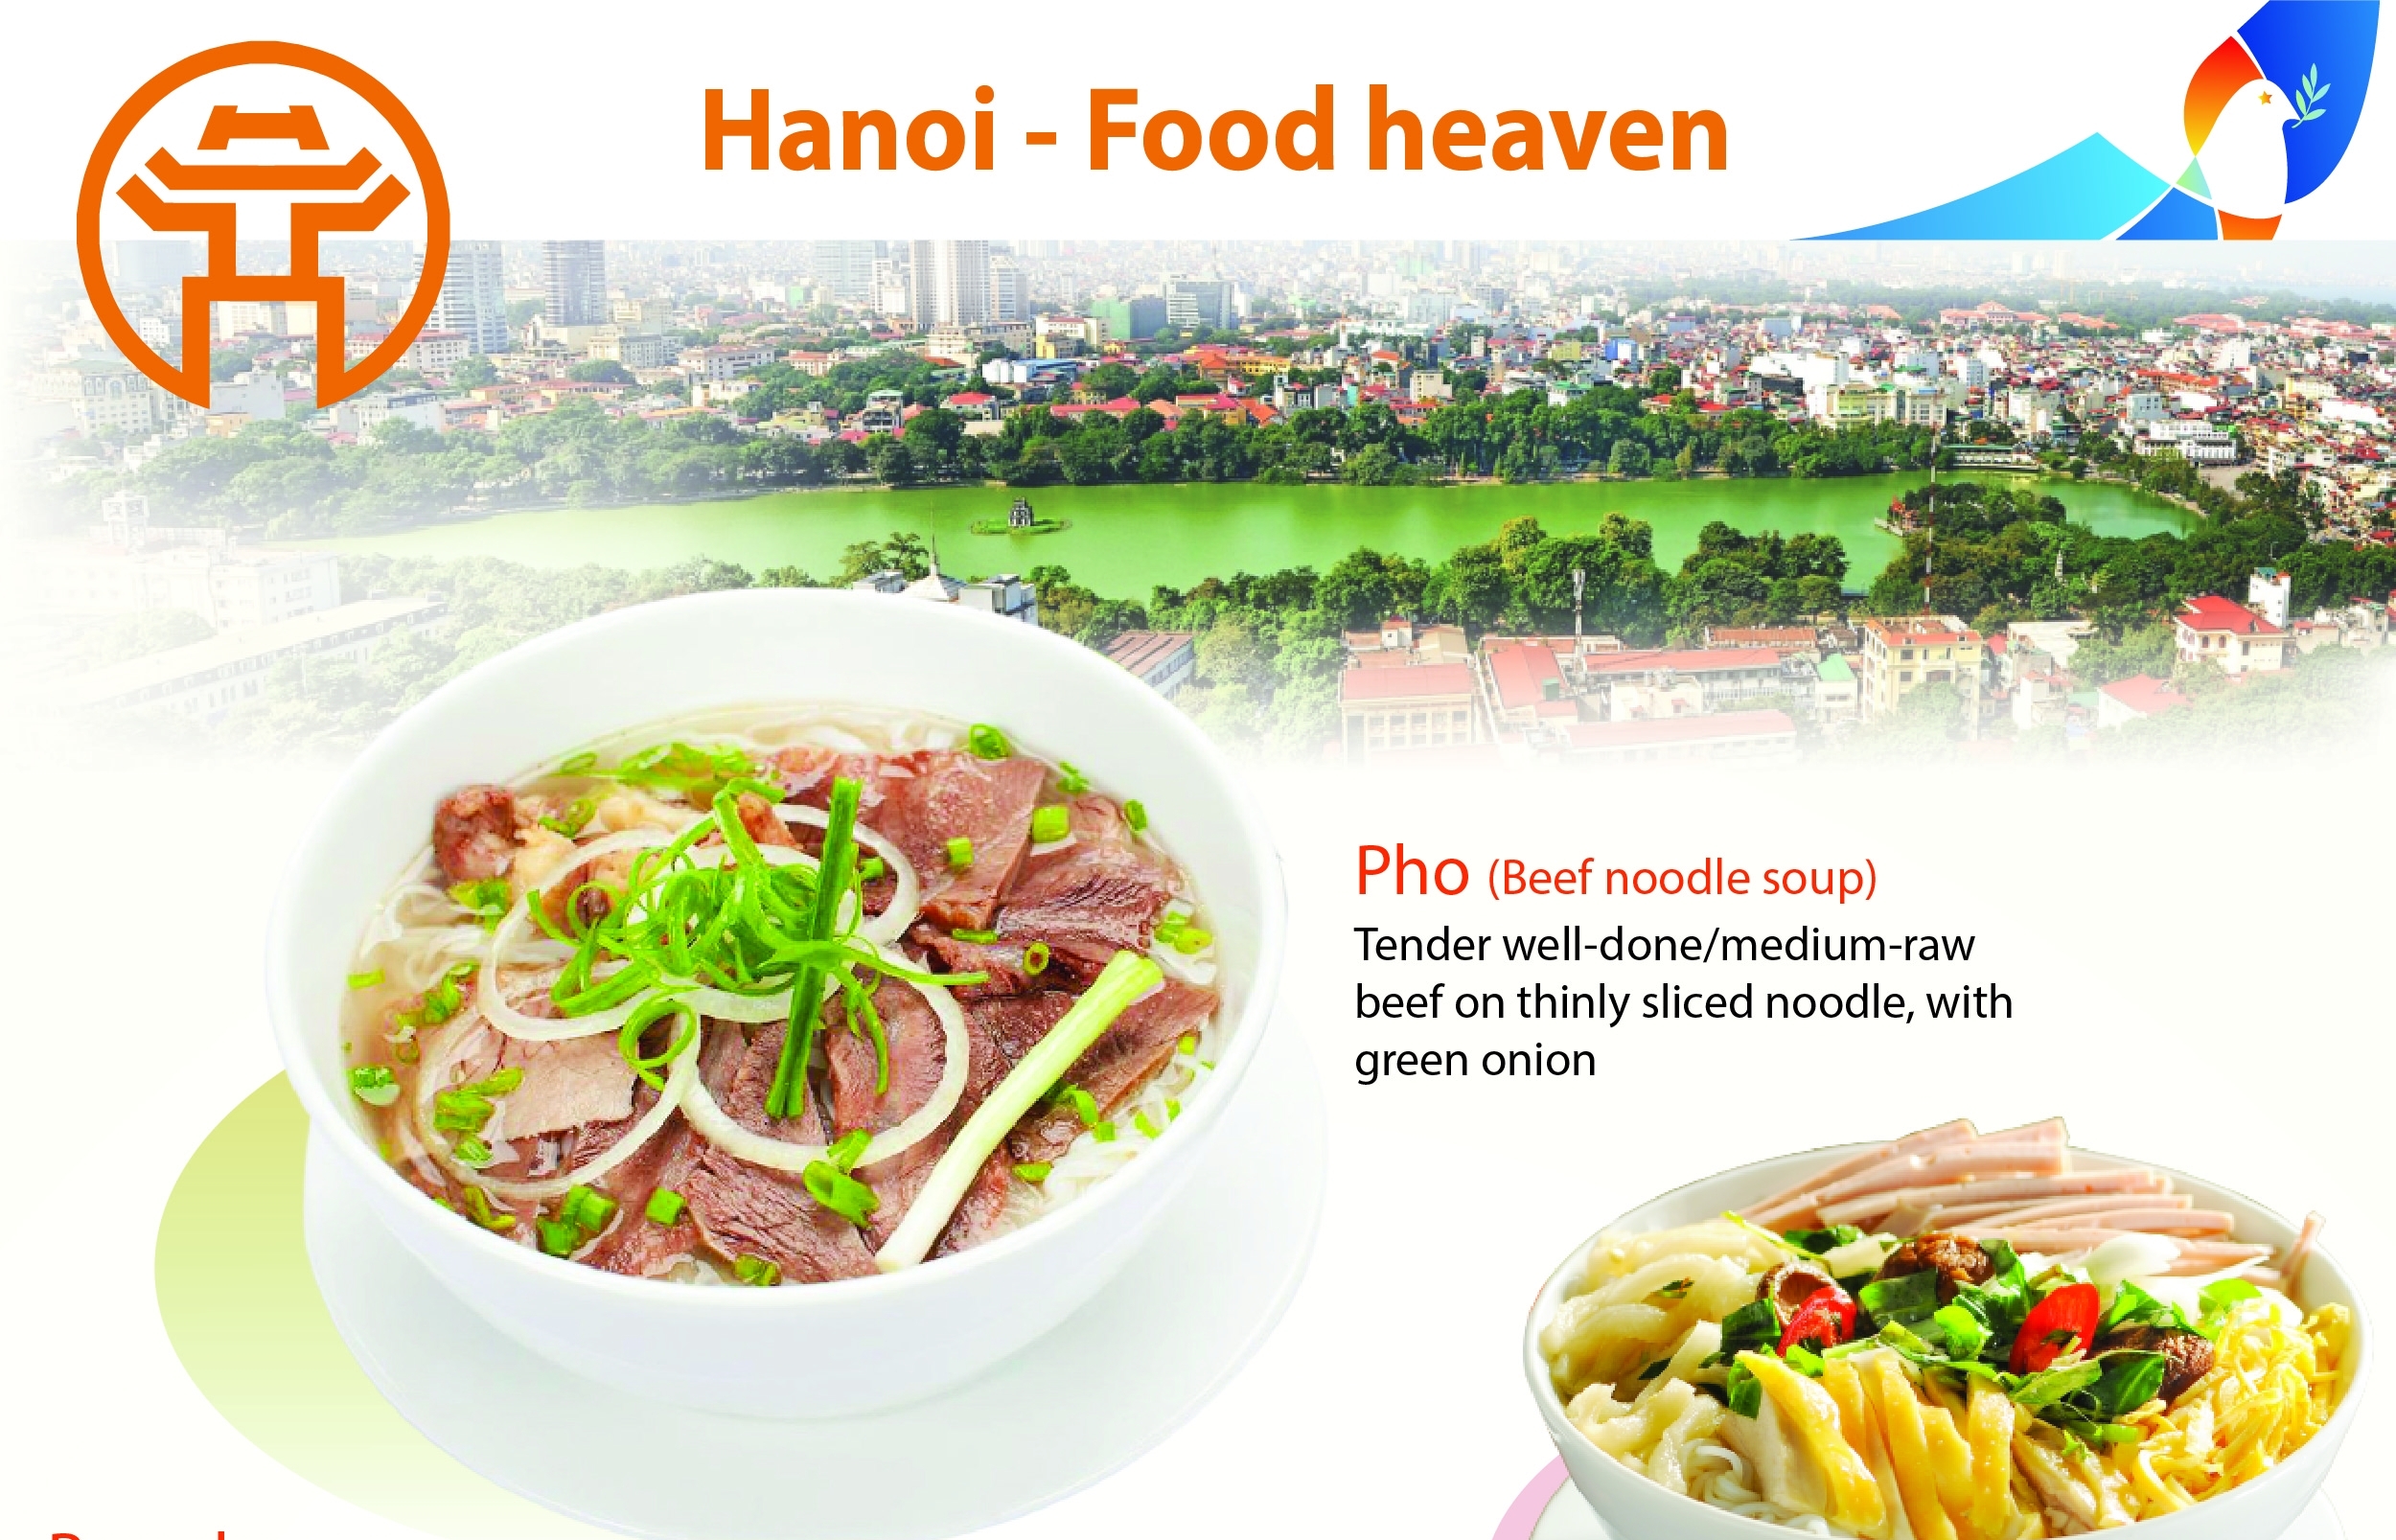 Hanoi - Food heaven